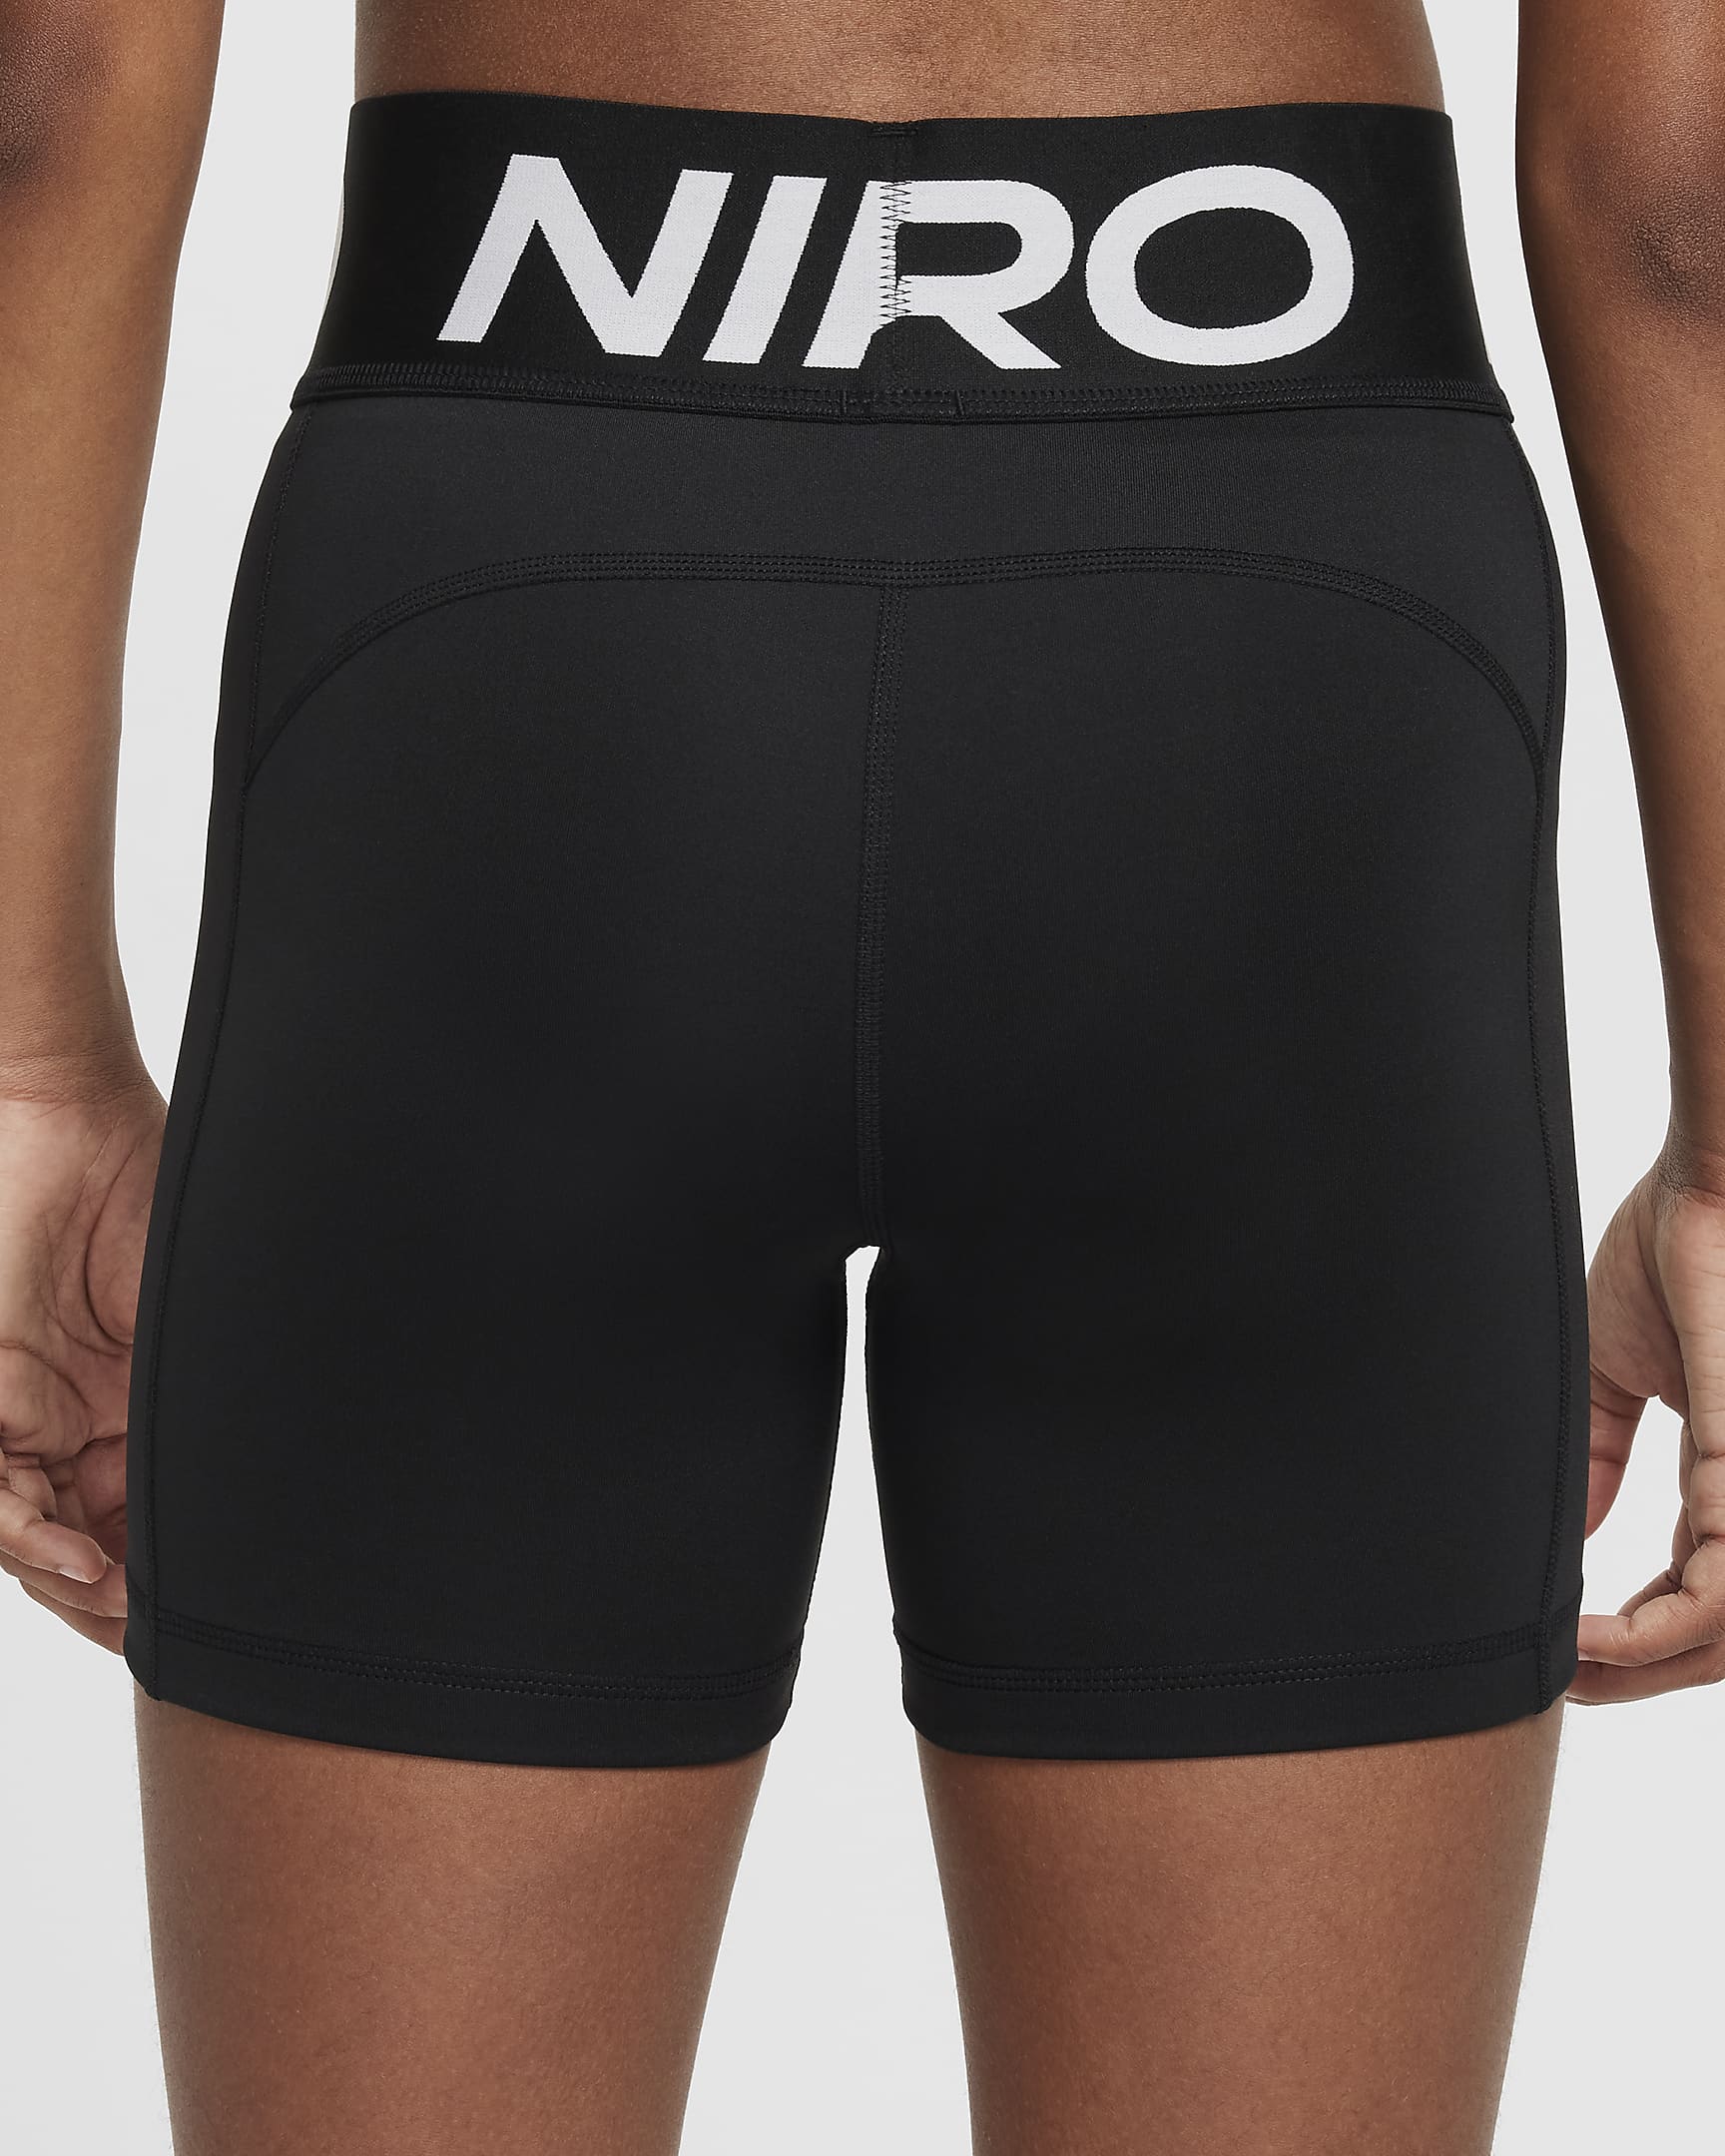 Calções Dri-FIT Nike Pro para rapariga - Preto/Branco